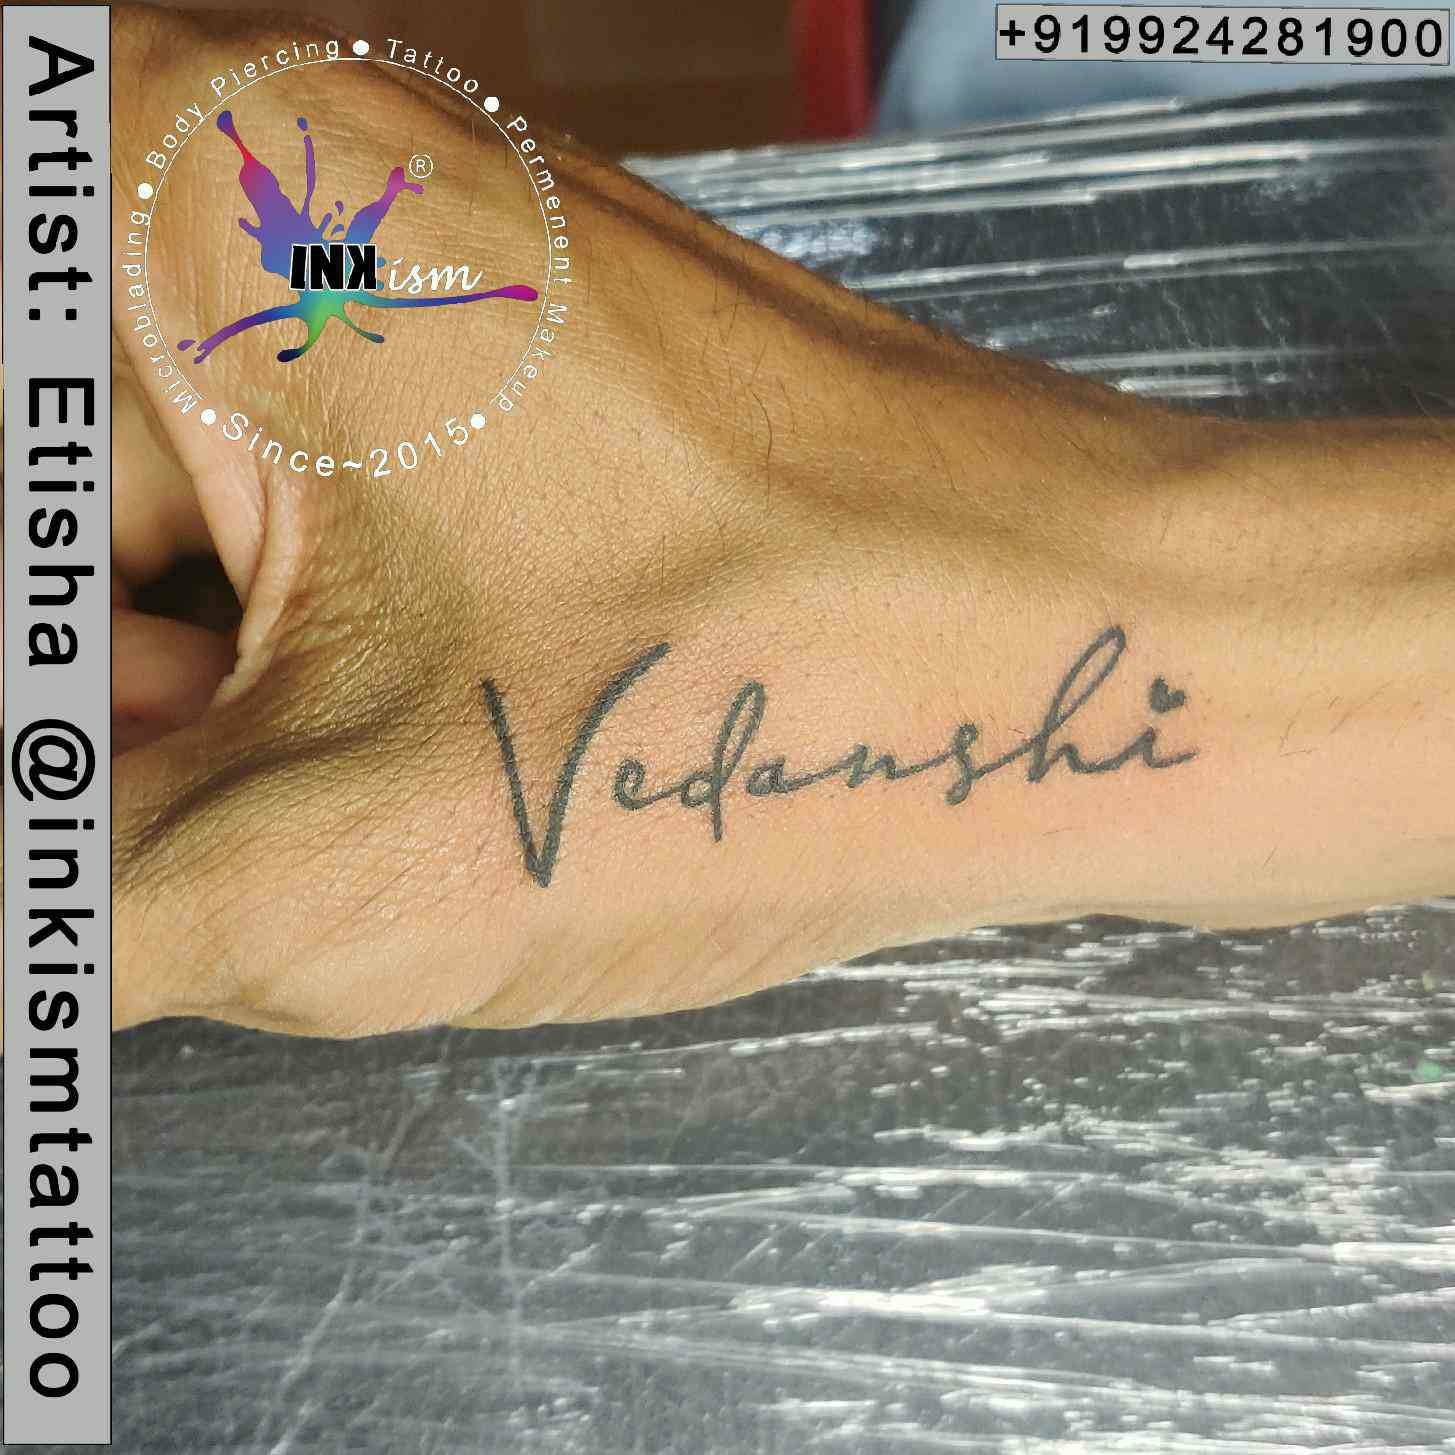 Name Tattoo Vedanshi by etishapatel on DeviantArt